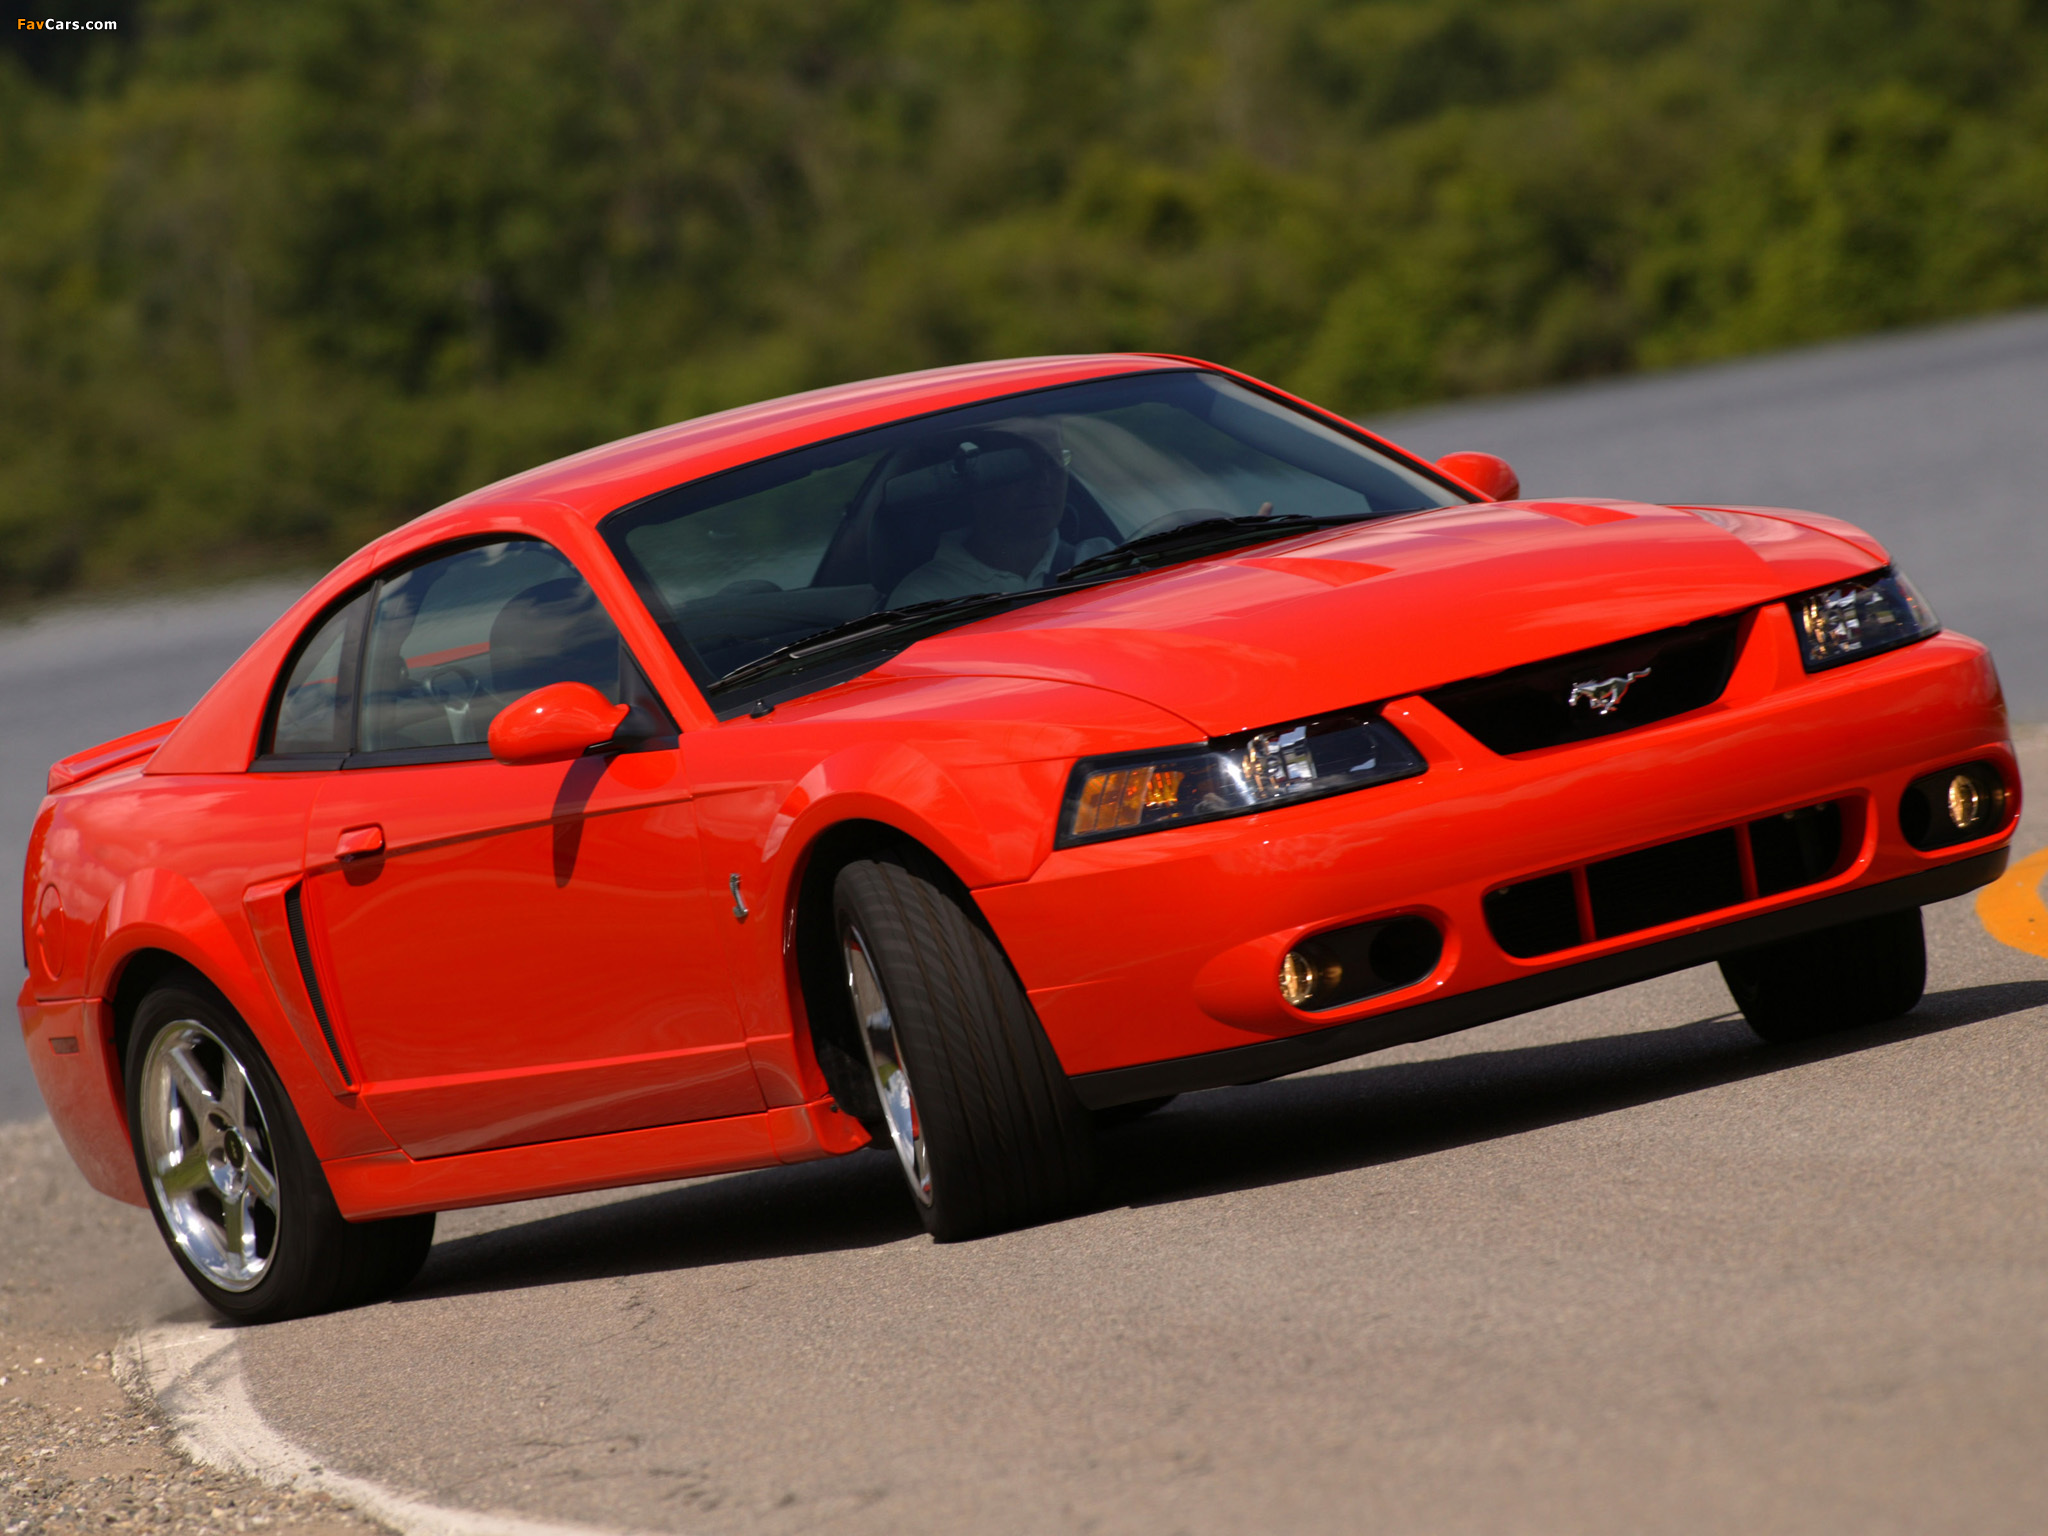 2004 Ford Mustang SVT Cobra For Sale - CarGurus